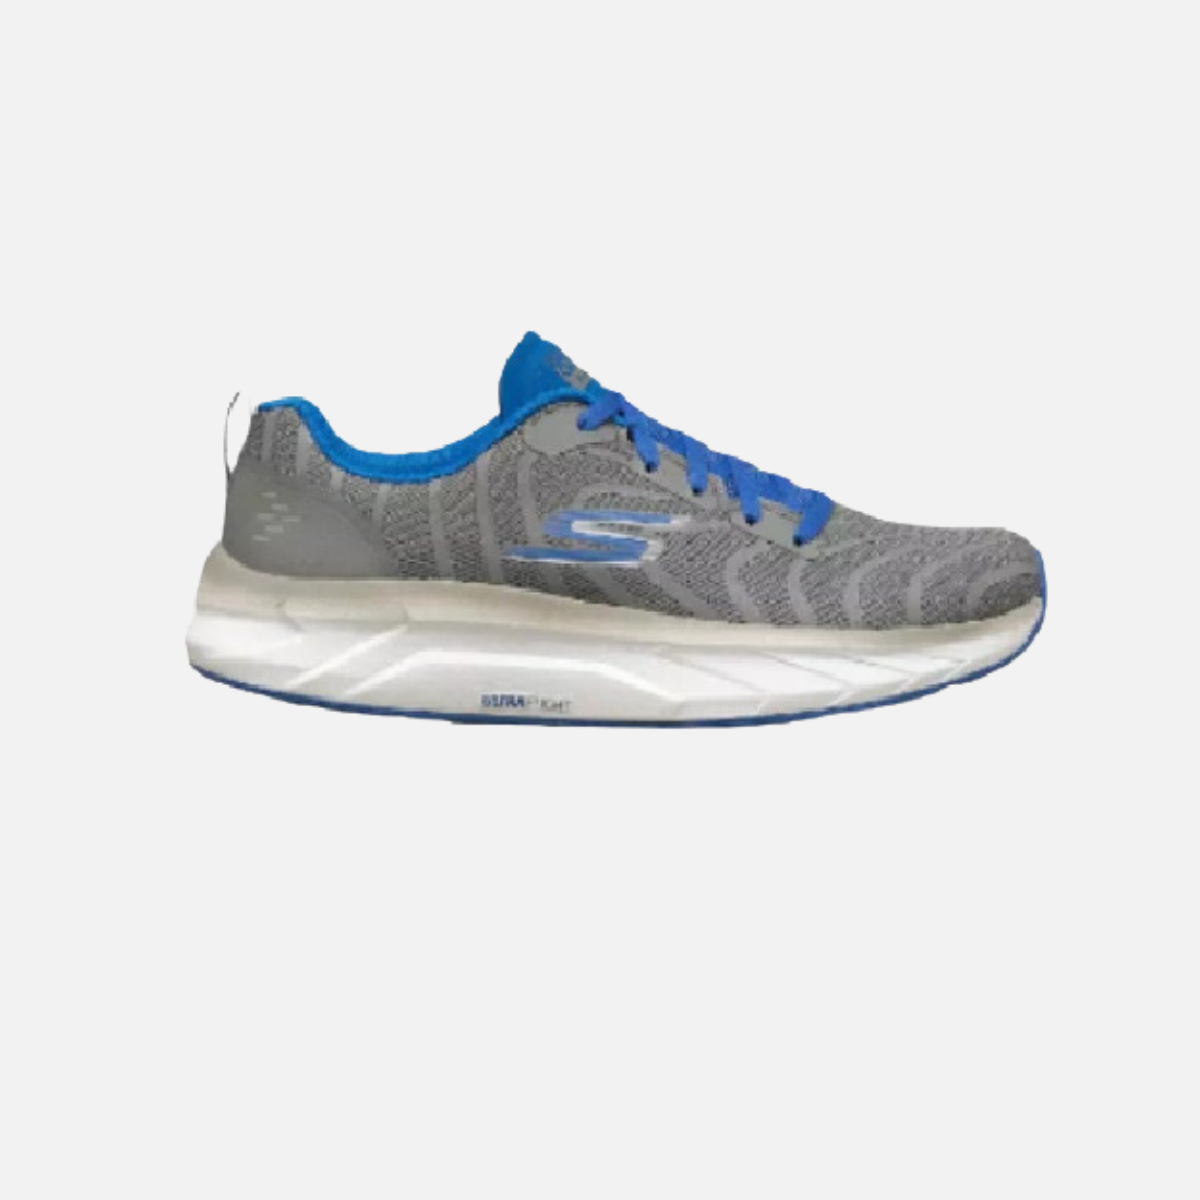 Skechers GOrun Balance 2 Tech Mens Running Shoe - Grey/Blue